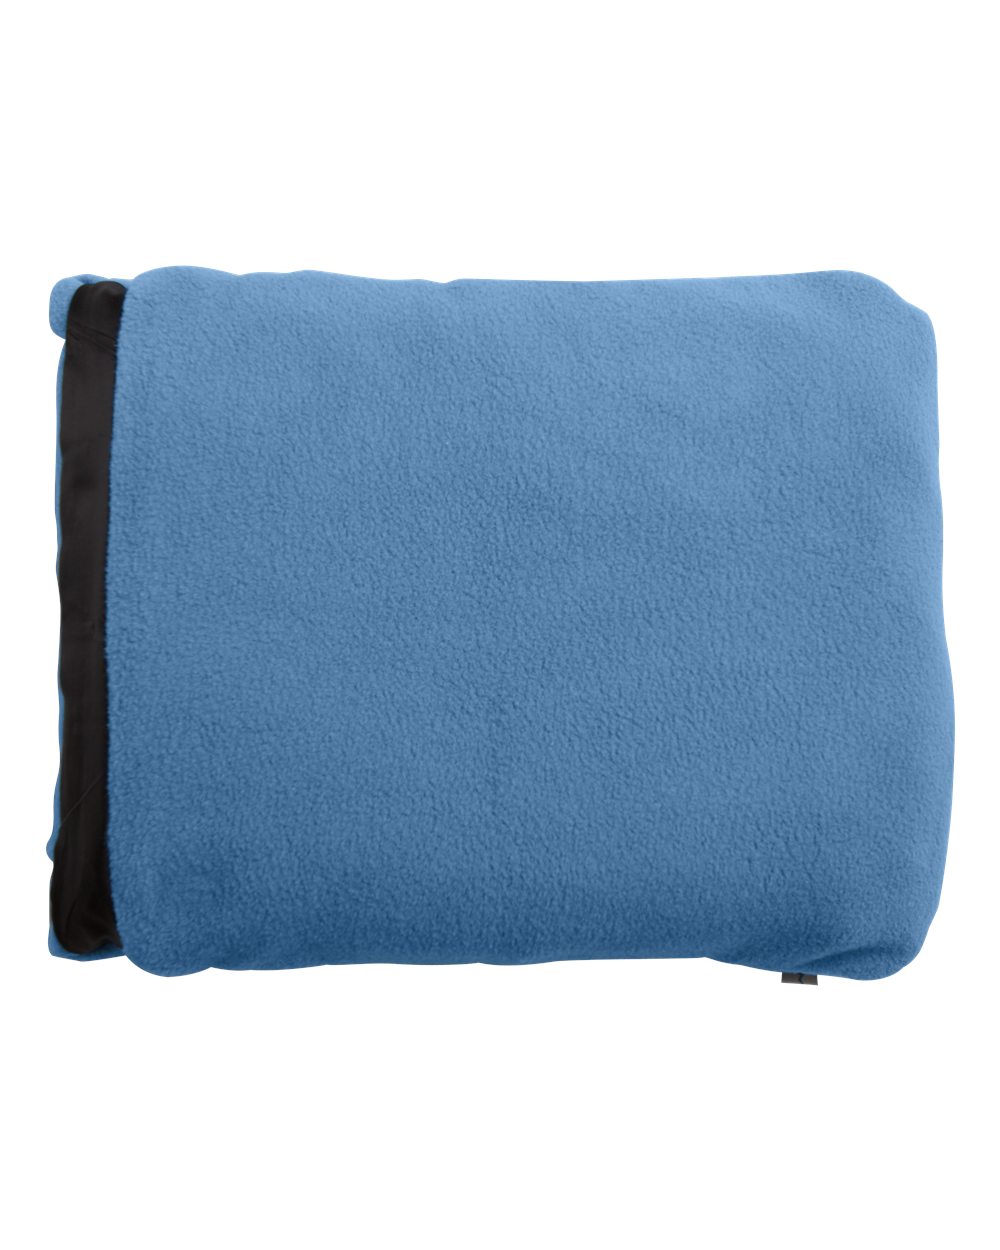 2-in-1 Pillow Blanket - 3004-Sierra Pacific